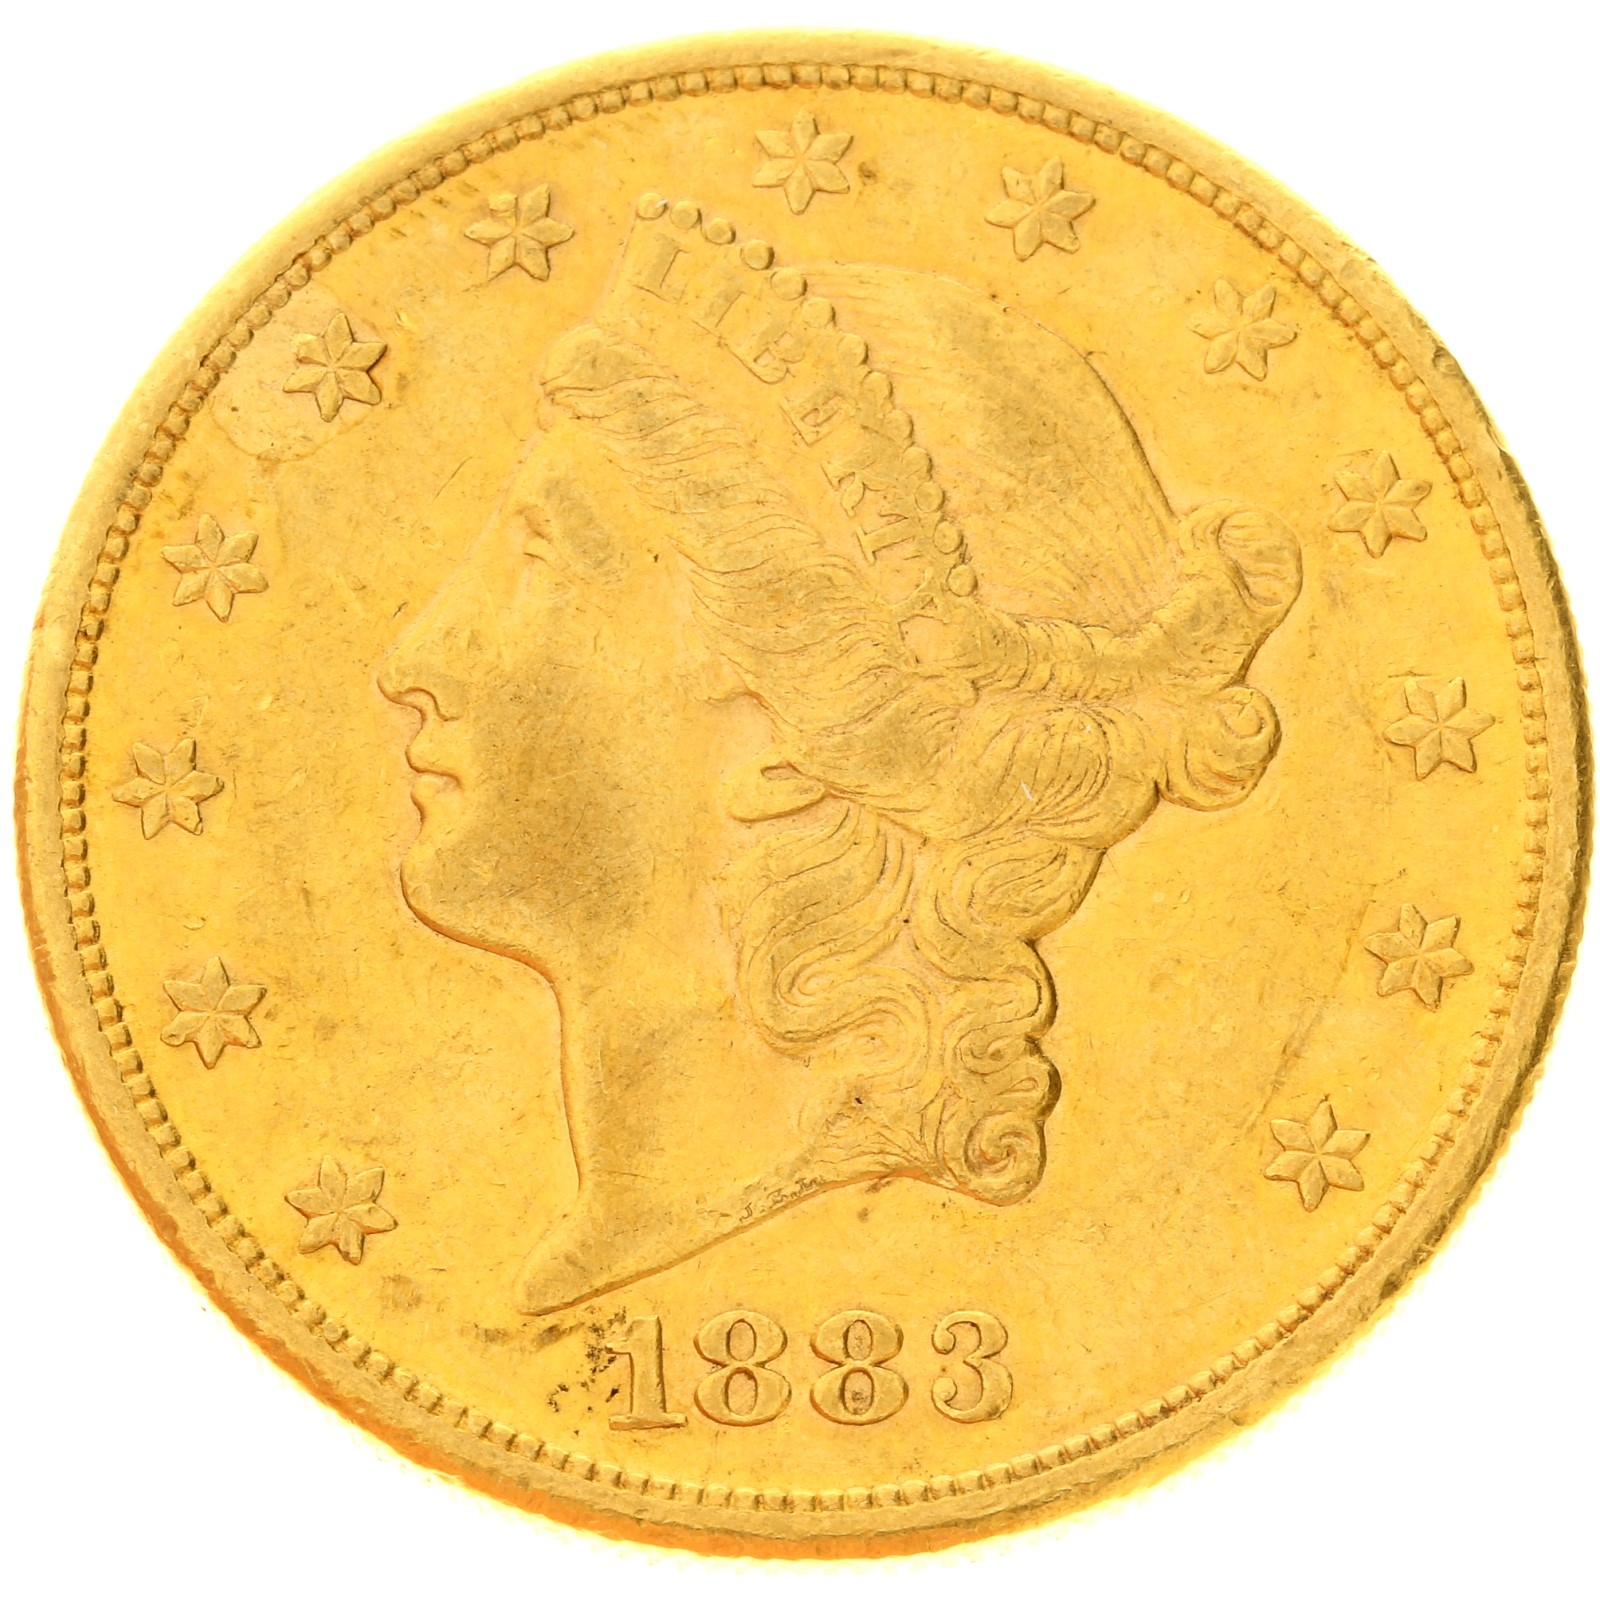 USA - 20 dollars - 1883 - S - Liberty Head 